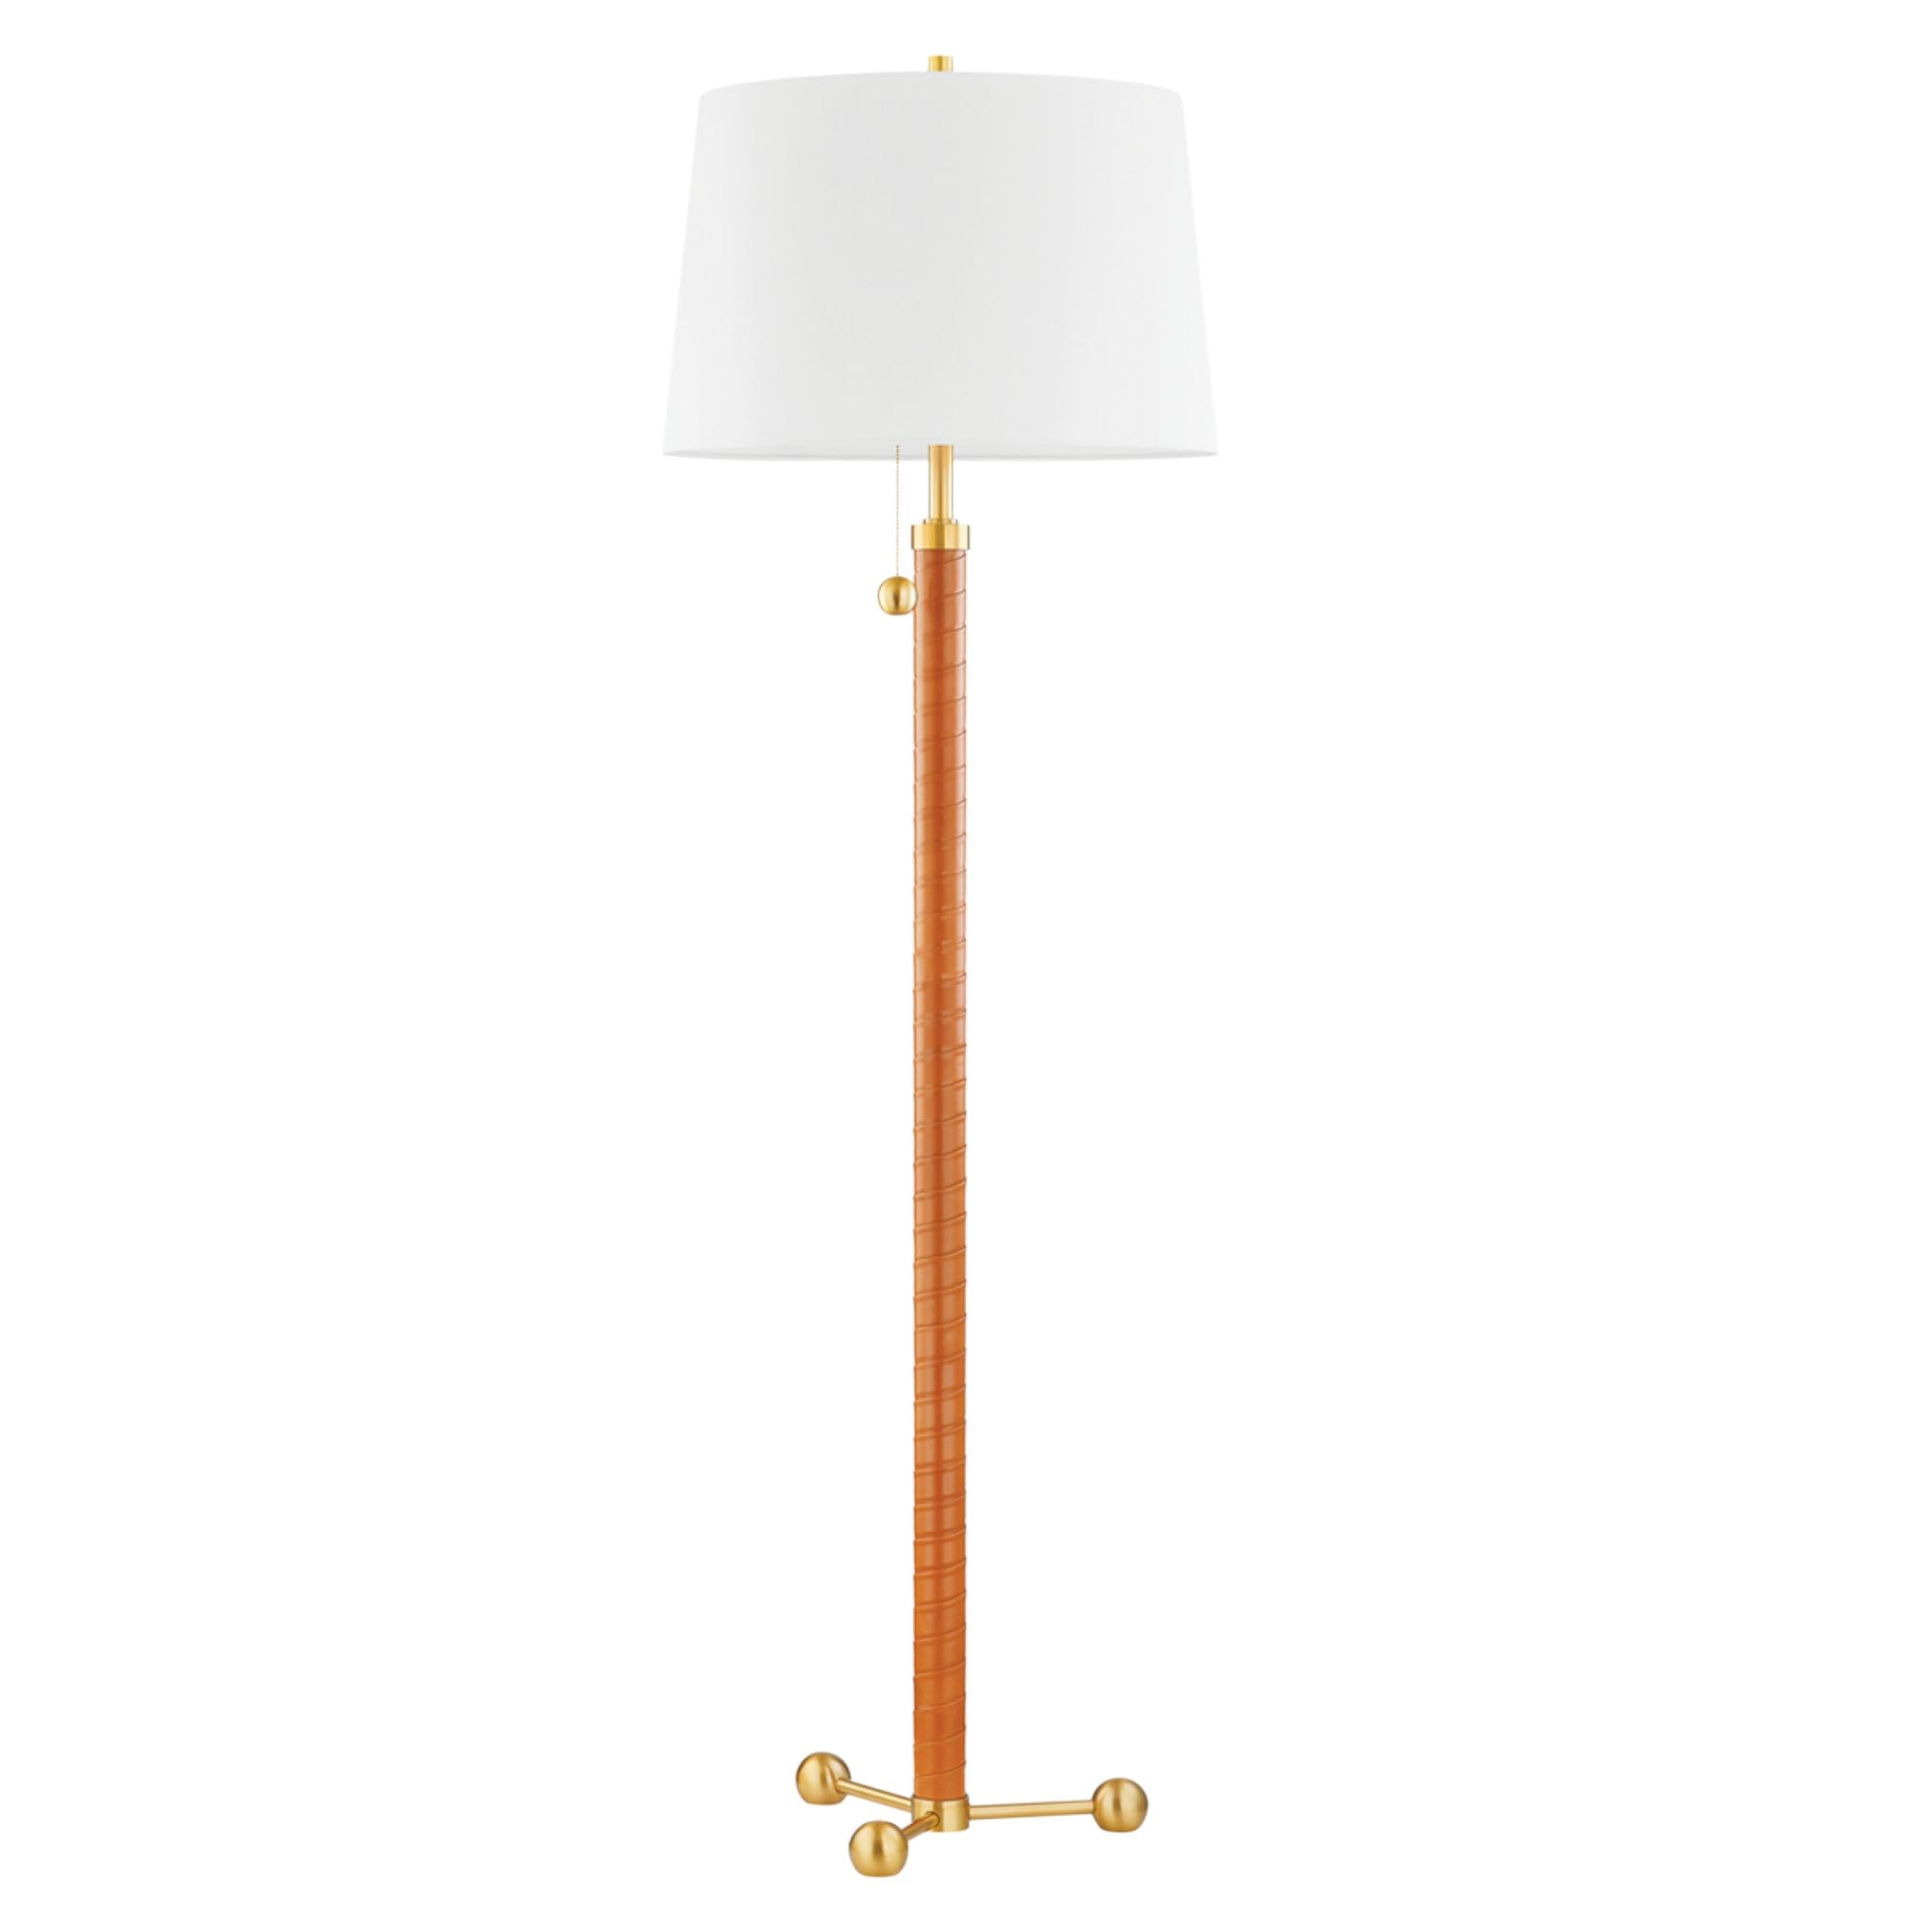 Wharton 2 Light Floor Lamp in Aged Brass